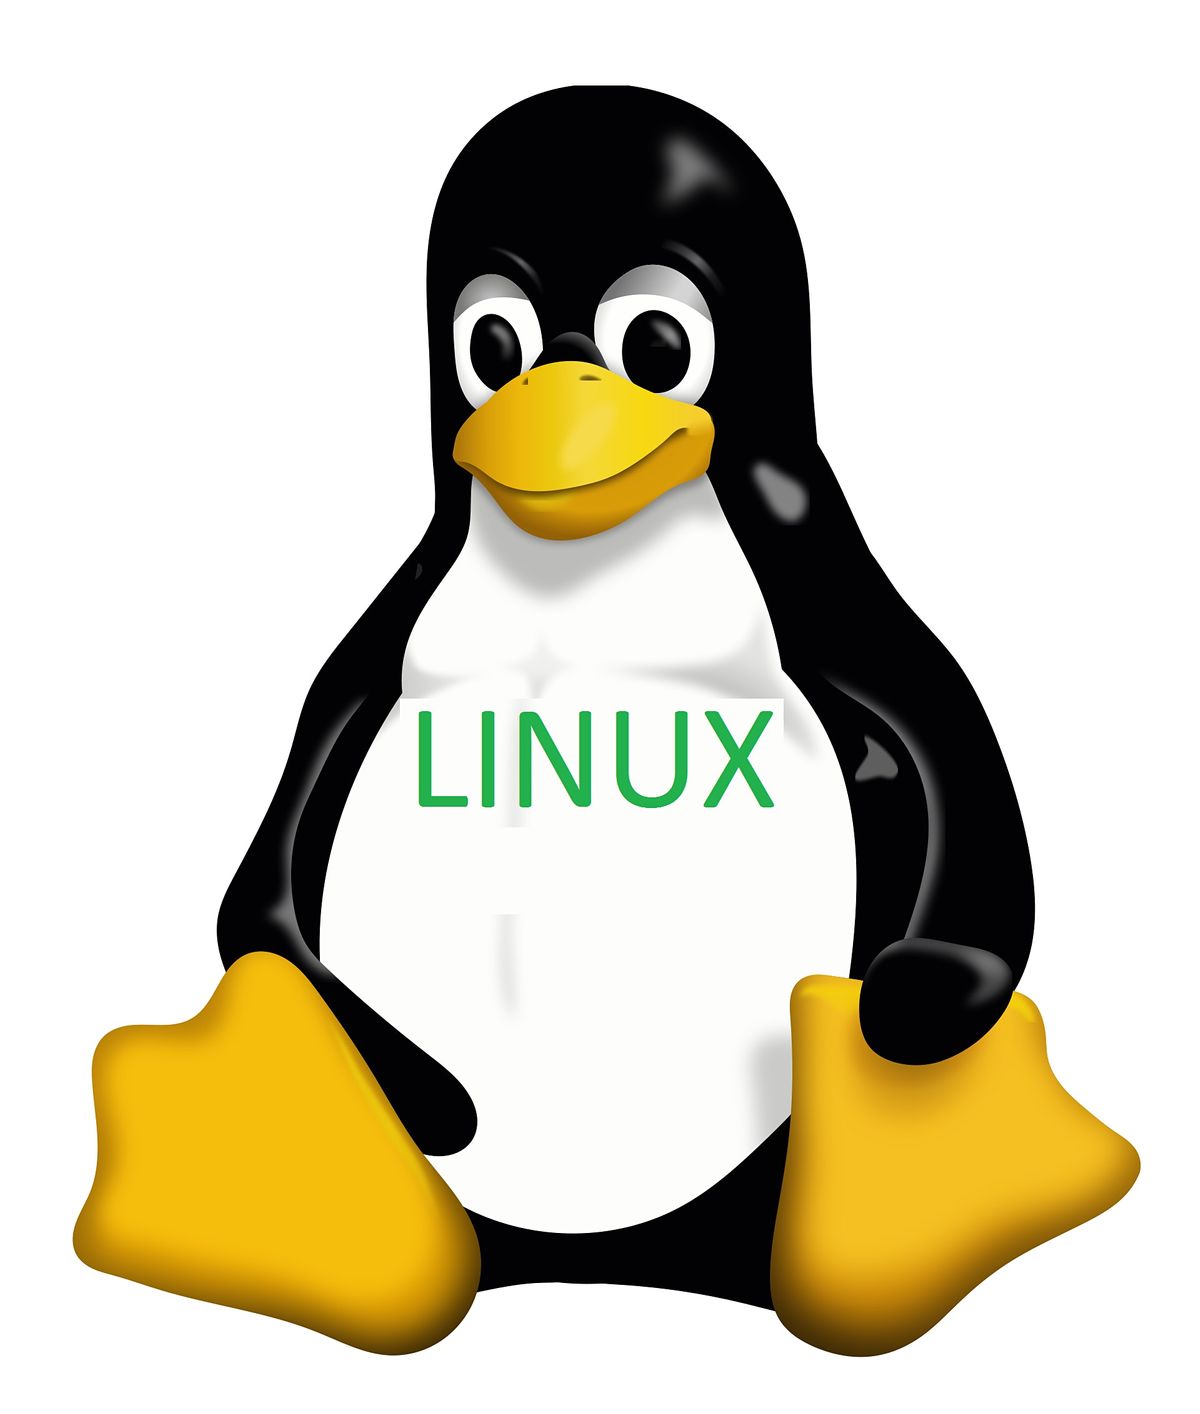 4 Weekends Linux & Unix Training Course in Allentown